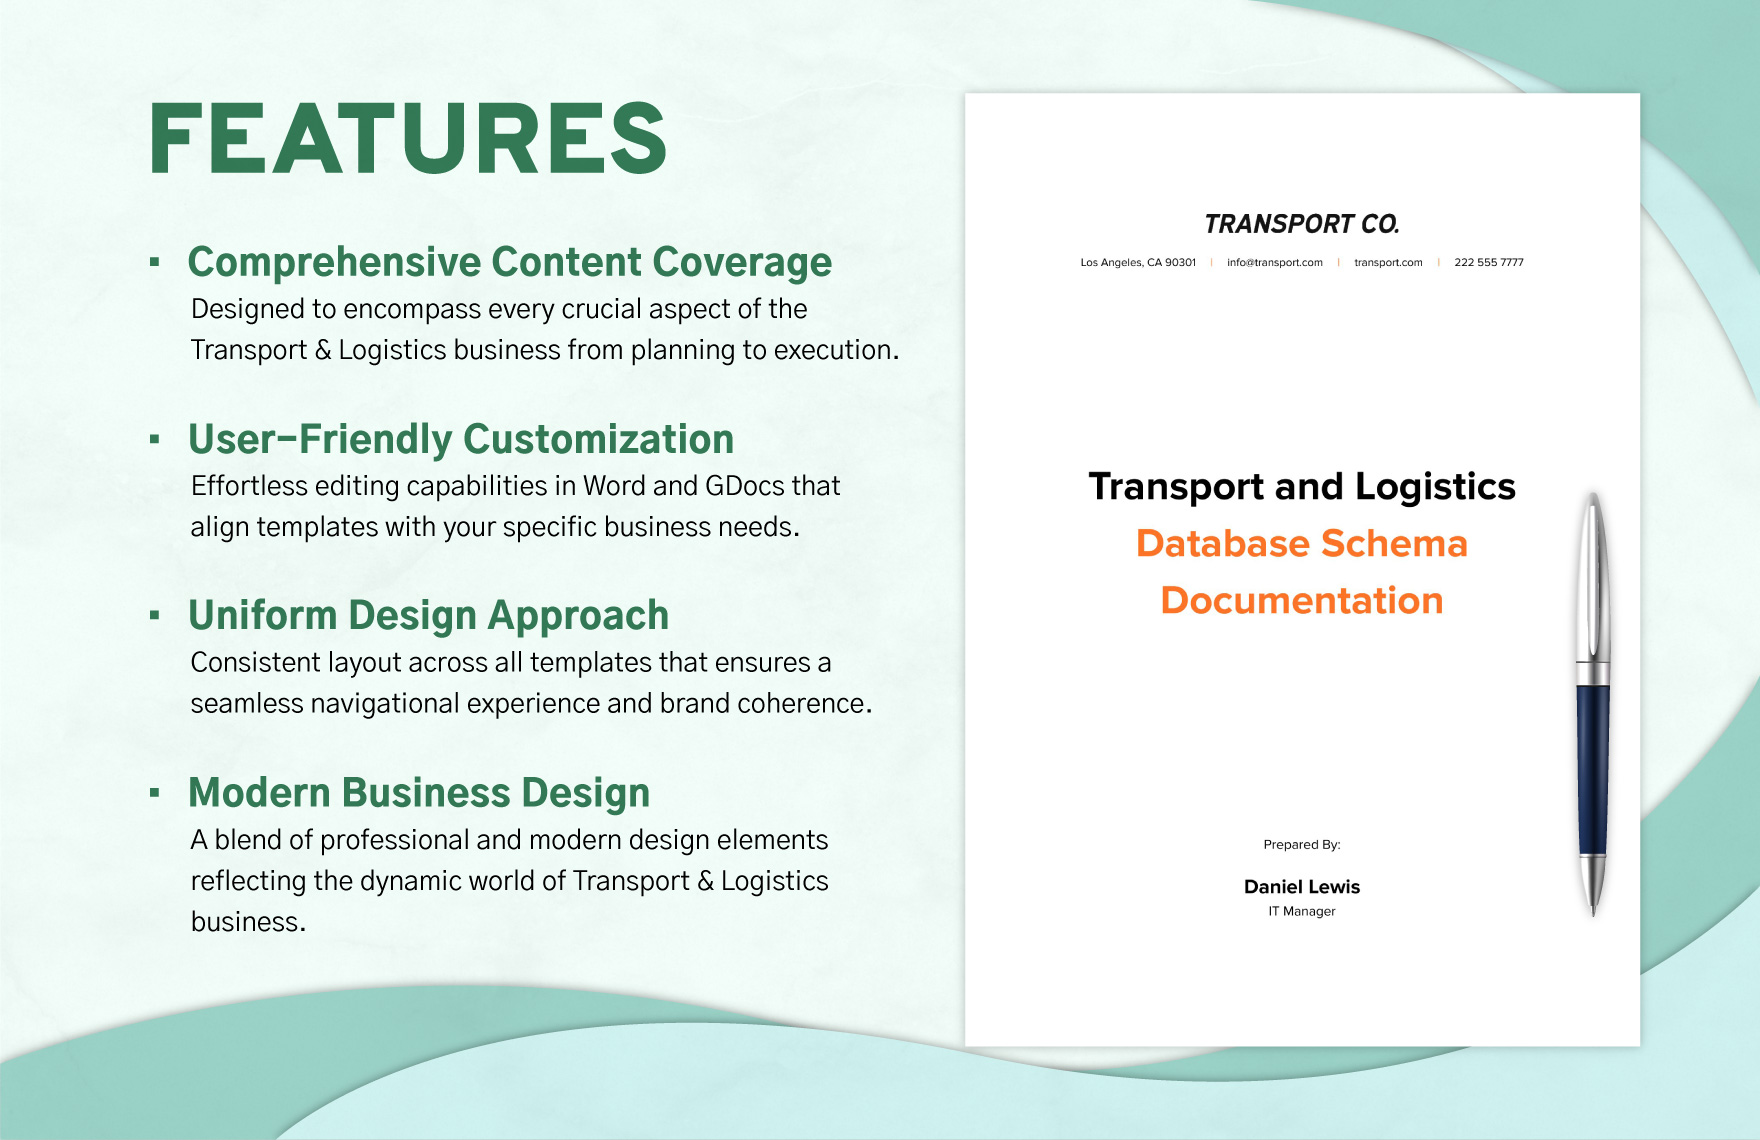 Transport and Logistics Database Schema Documentation Template